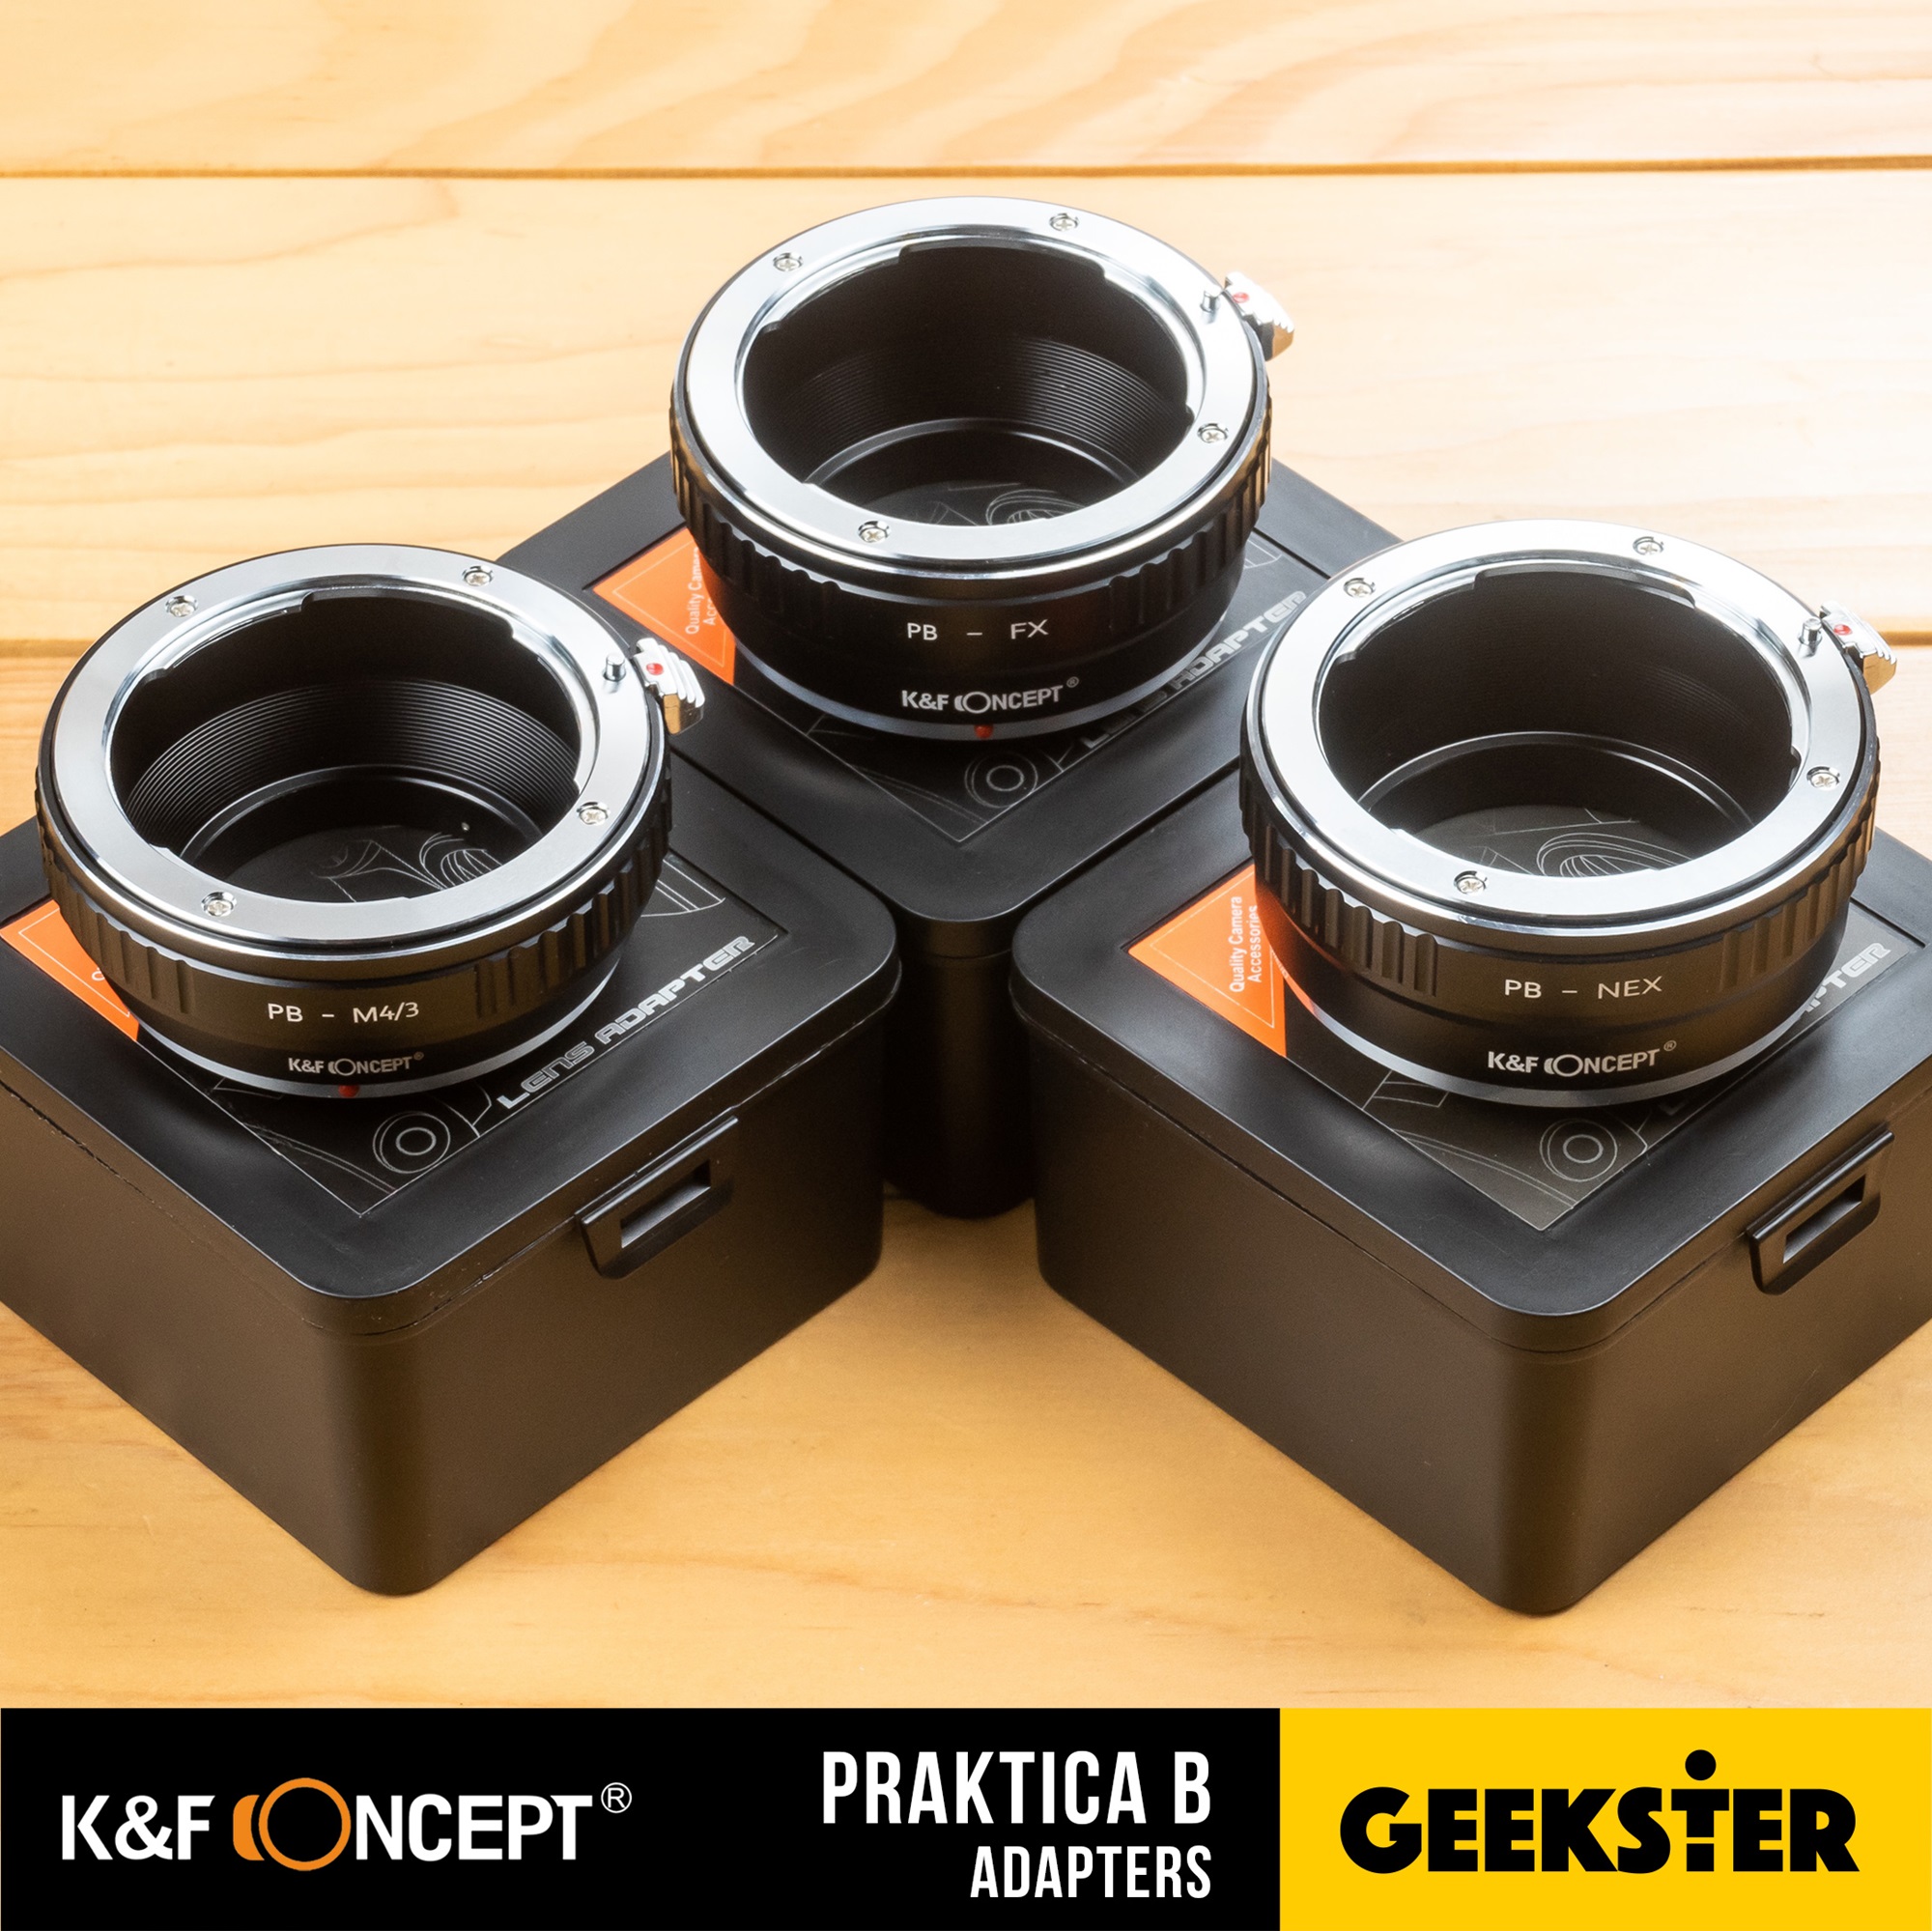 K&F Praktica B PB Adapter แปลงเลนส์ Praktica B เพื่อเอามาใส่กล้อง Mirrorless ( Lens mount adapter Praktica B PB For Mirrorless ) ( เมาท์แปลง ) ( PB-FX FX / PB-M43 M43 / PB-M4/3 M4/3 / PB-NEX NEX ) ( Geekster )